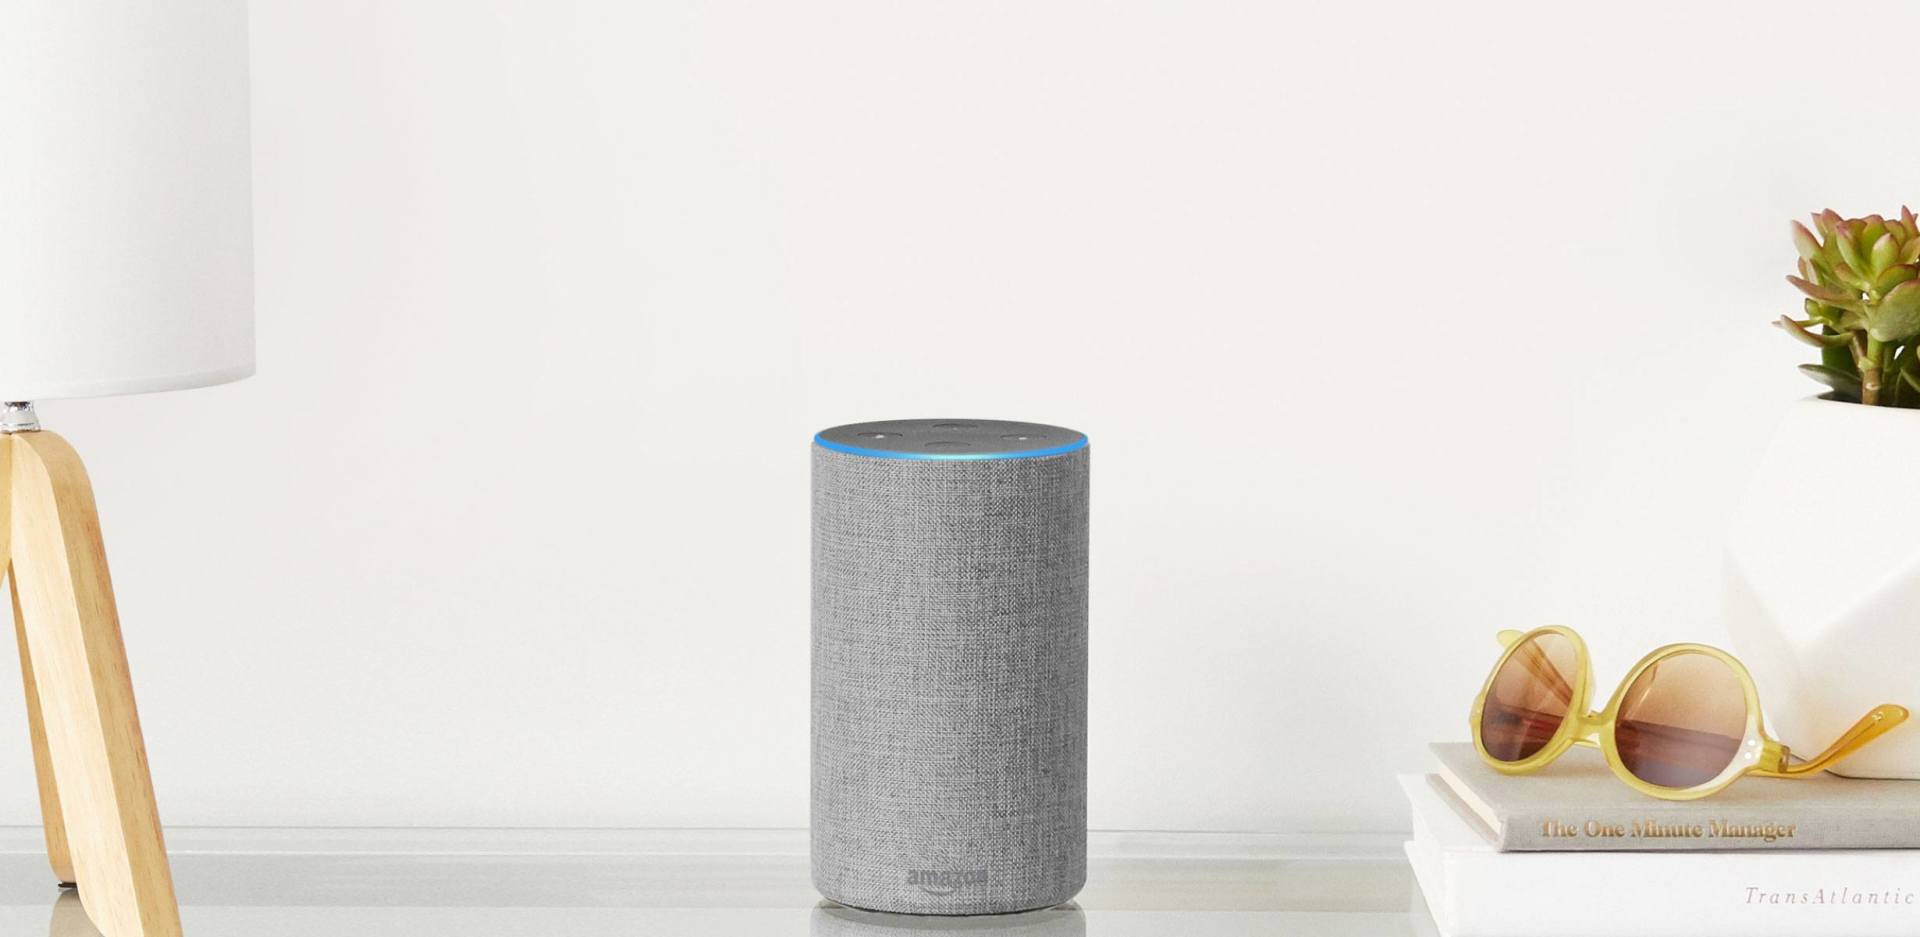 Amazon Alexa, Local Business Voice Search Tools